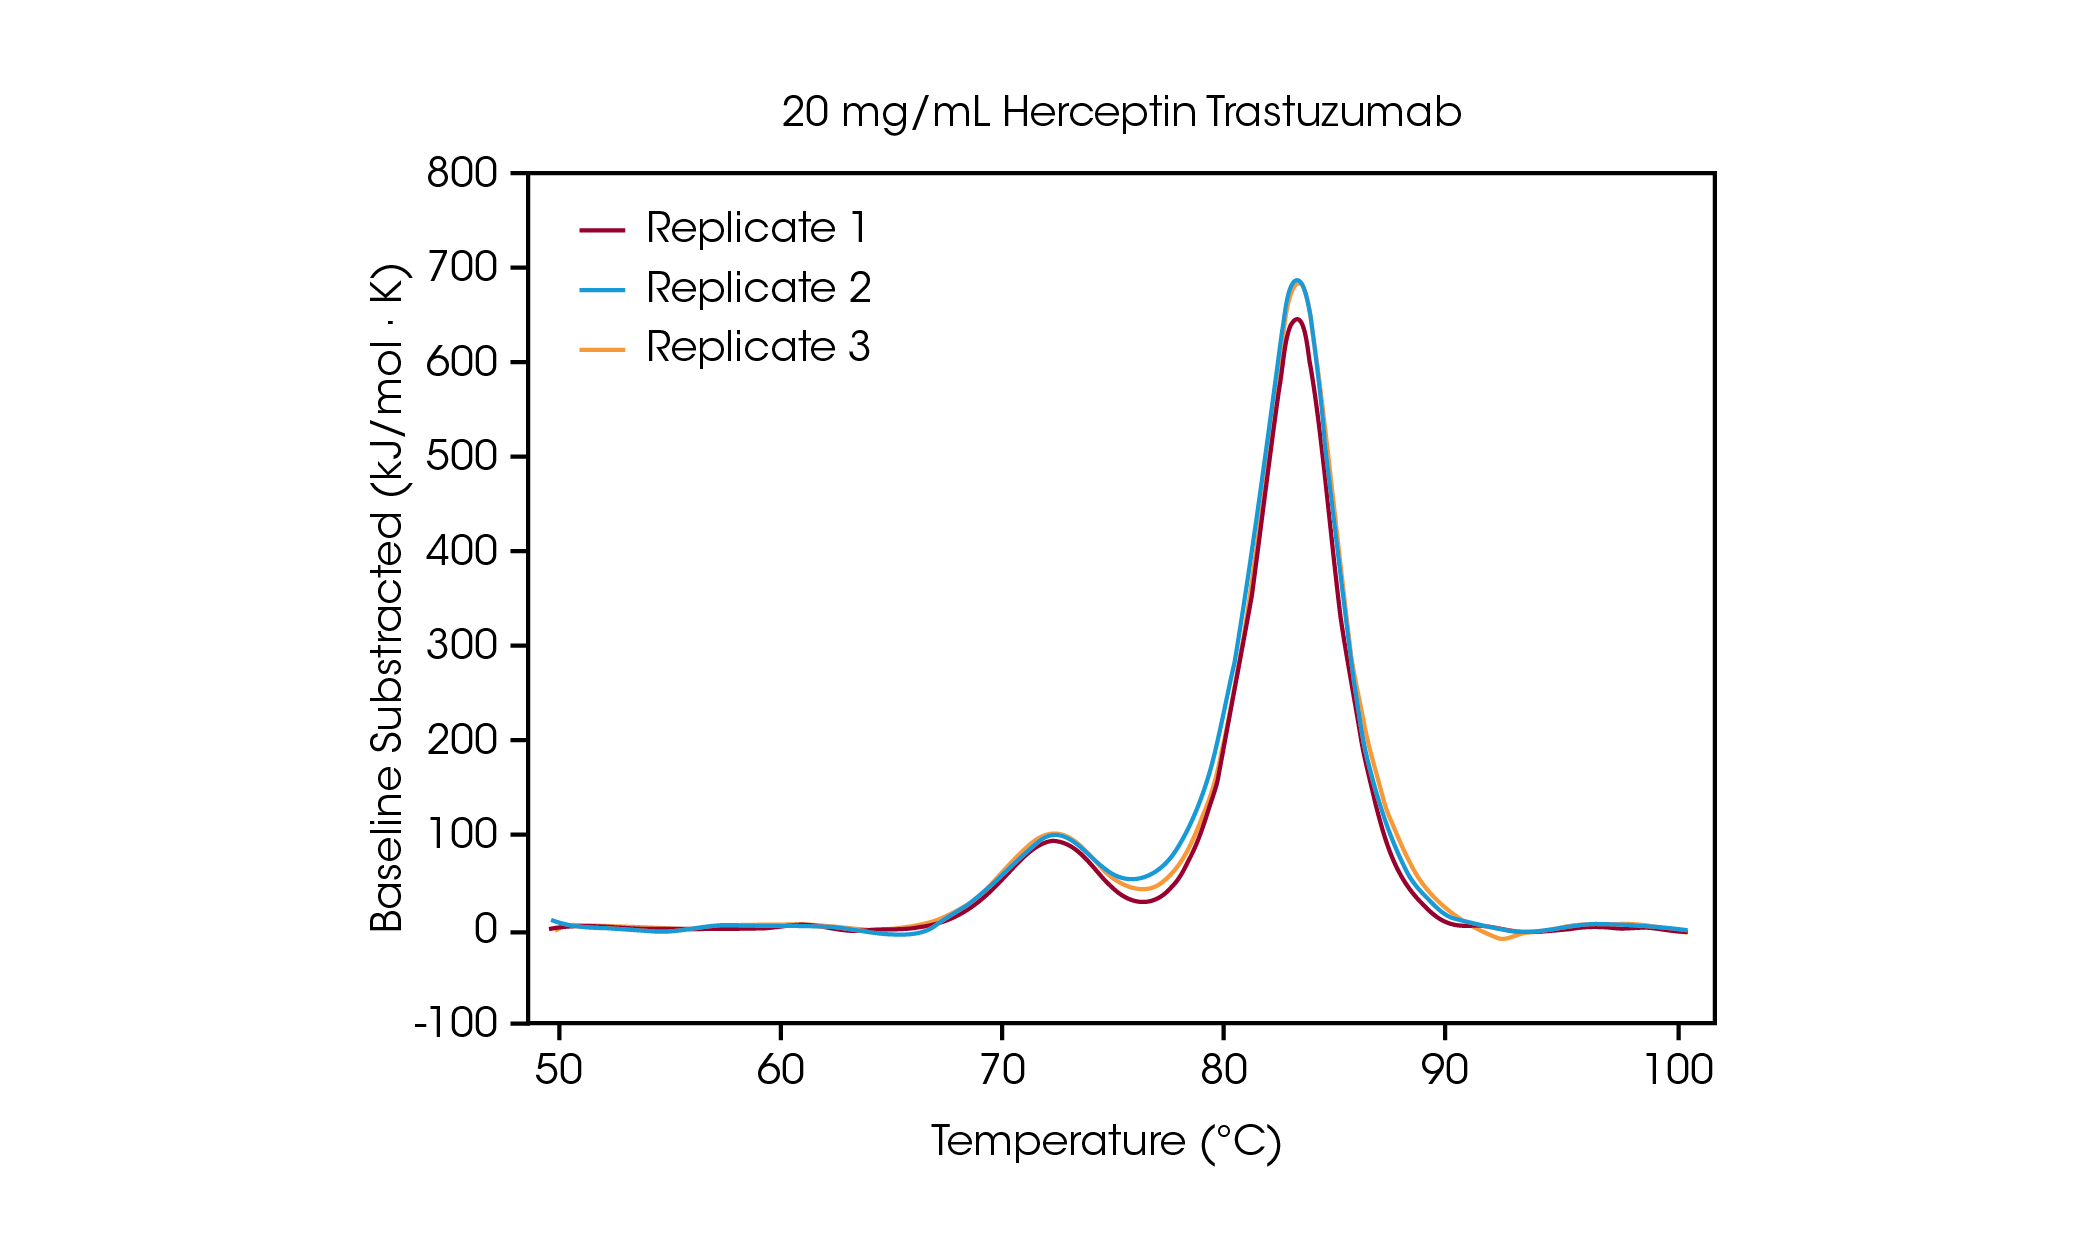 Figure 3. Triplicate thermograms of Herceptin Trastuzumab in PBS buffer at 20 mg/mL.